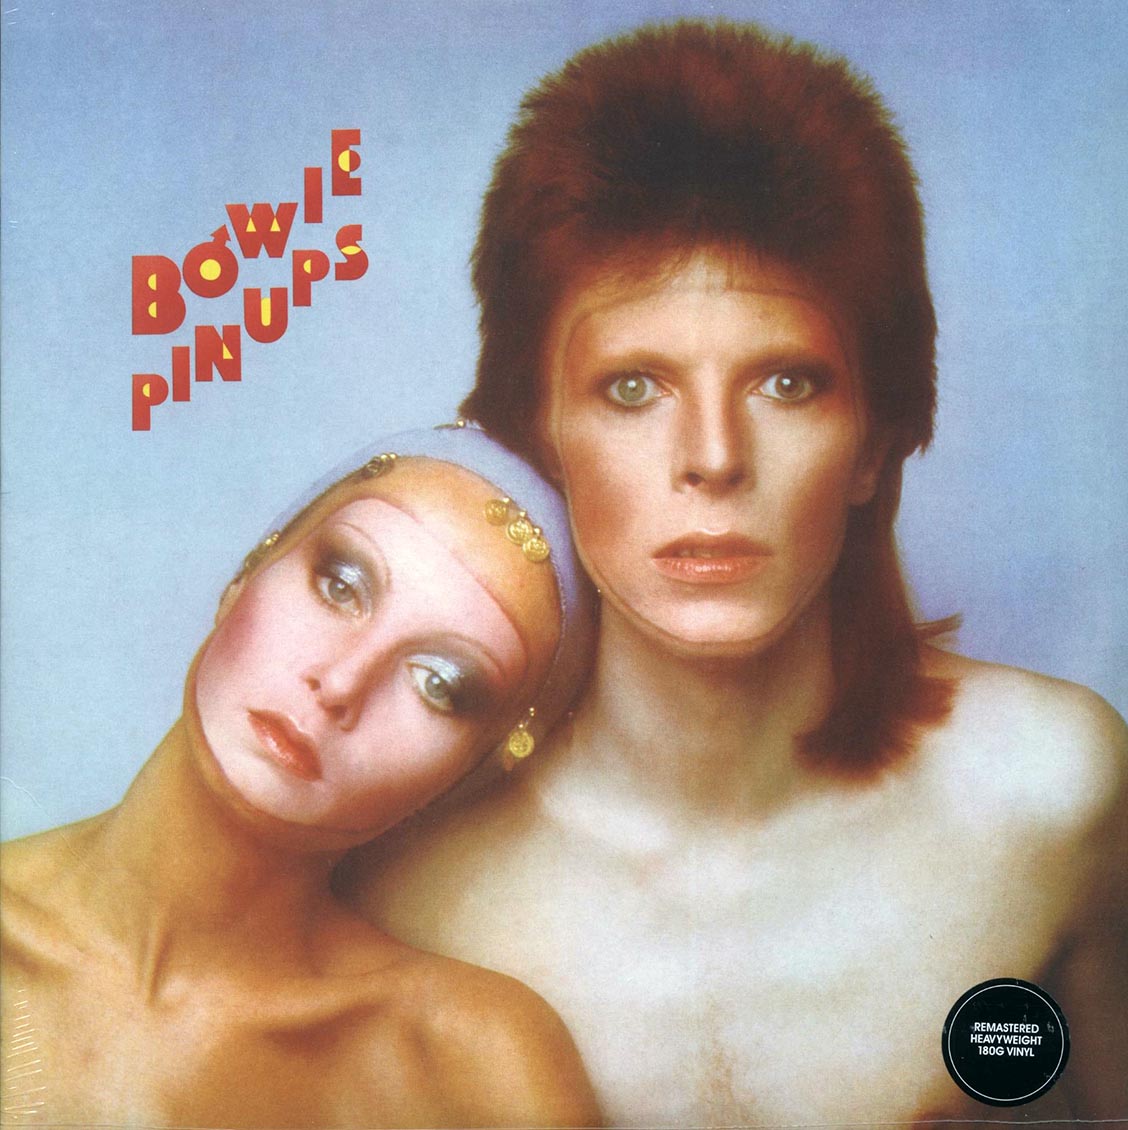 David Bowie - Pinups [2016 Reissue Remastered 180G] [New Vinyl Record LP]